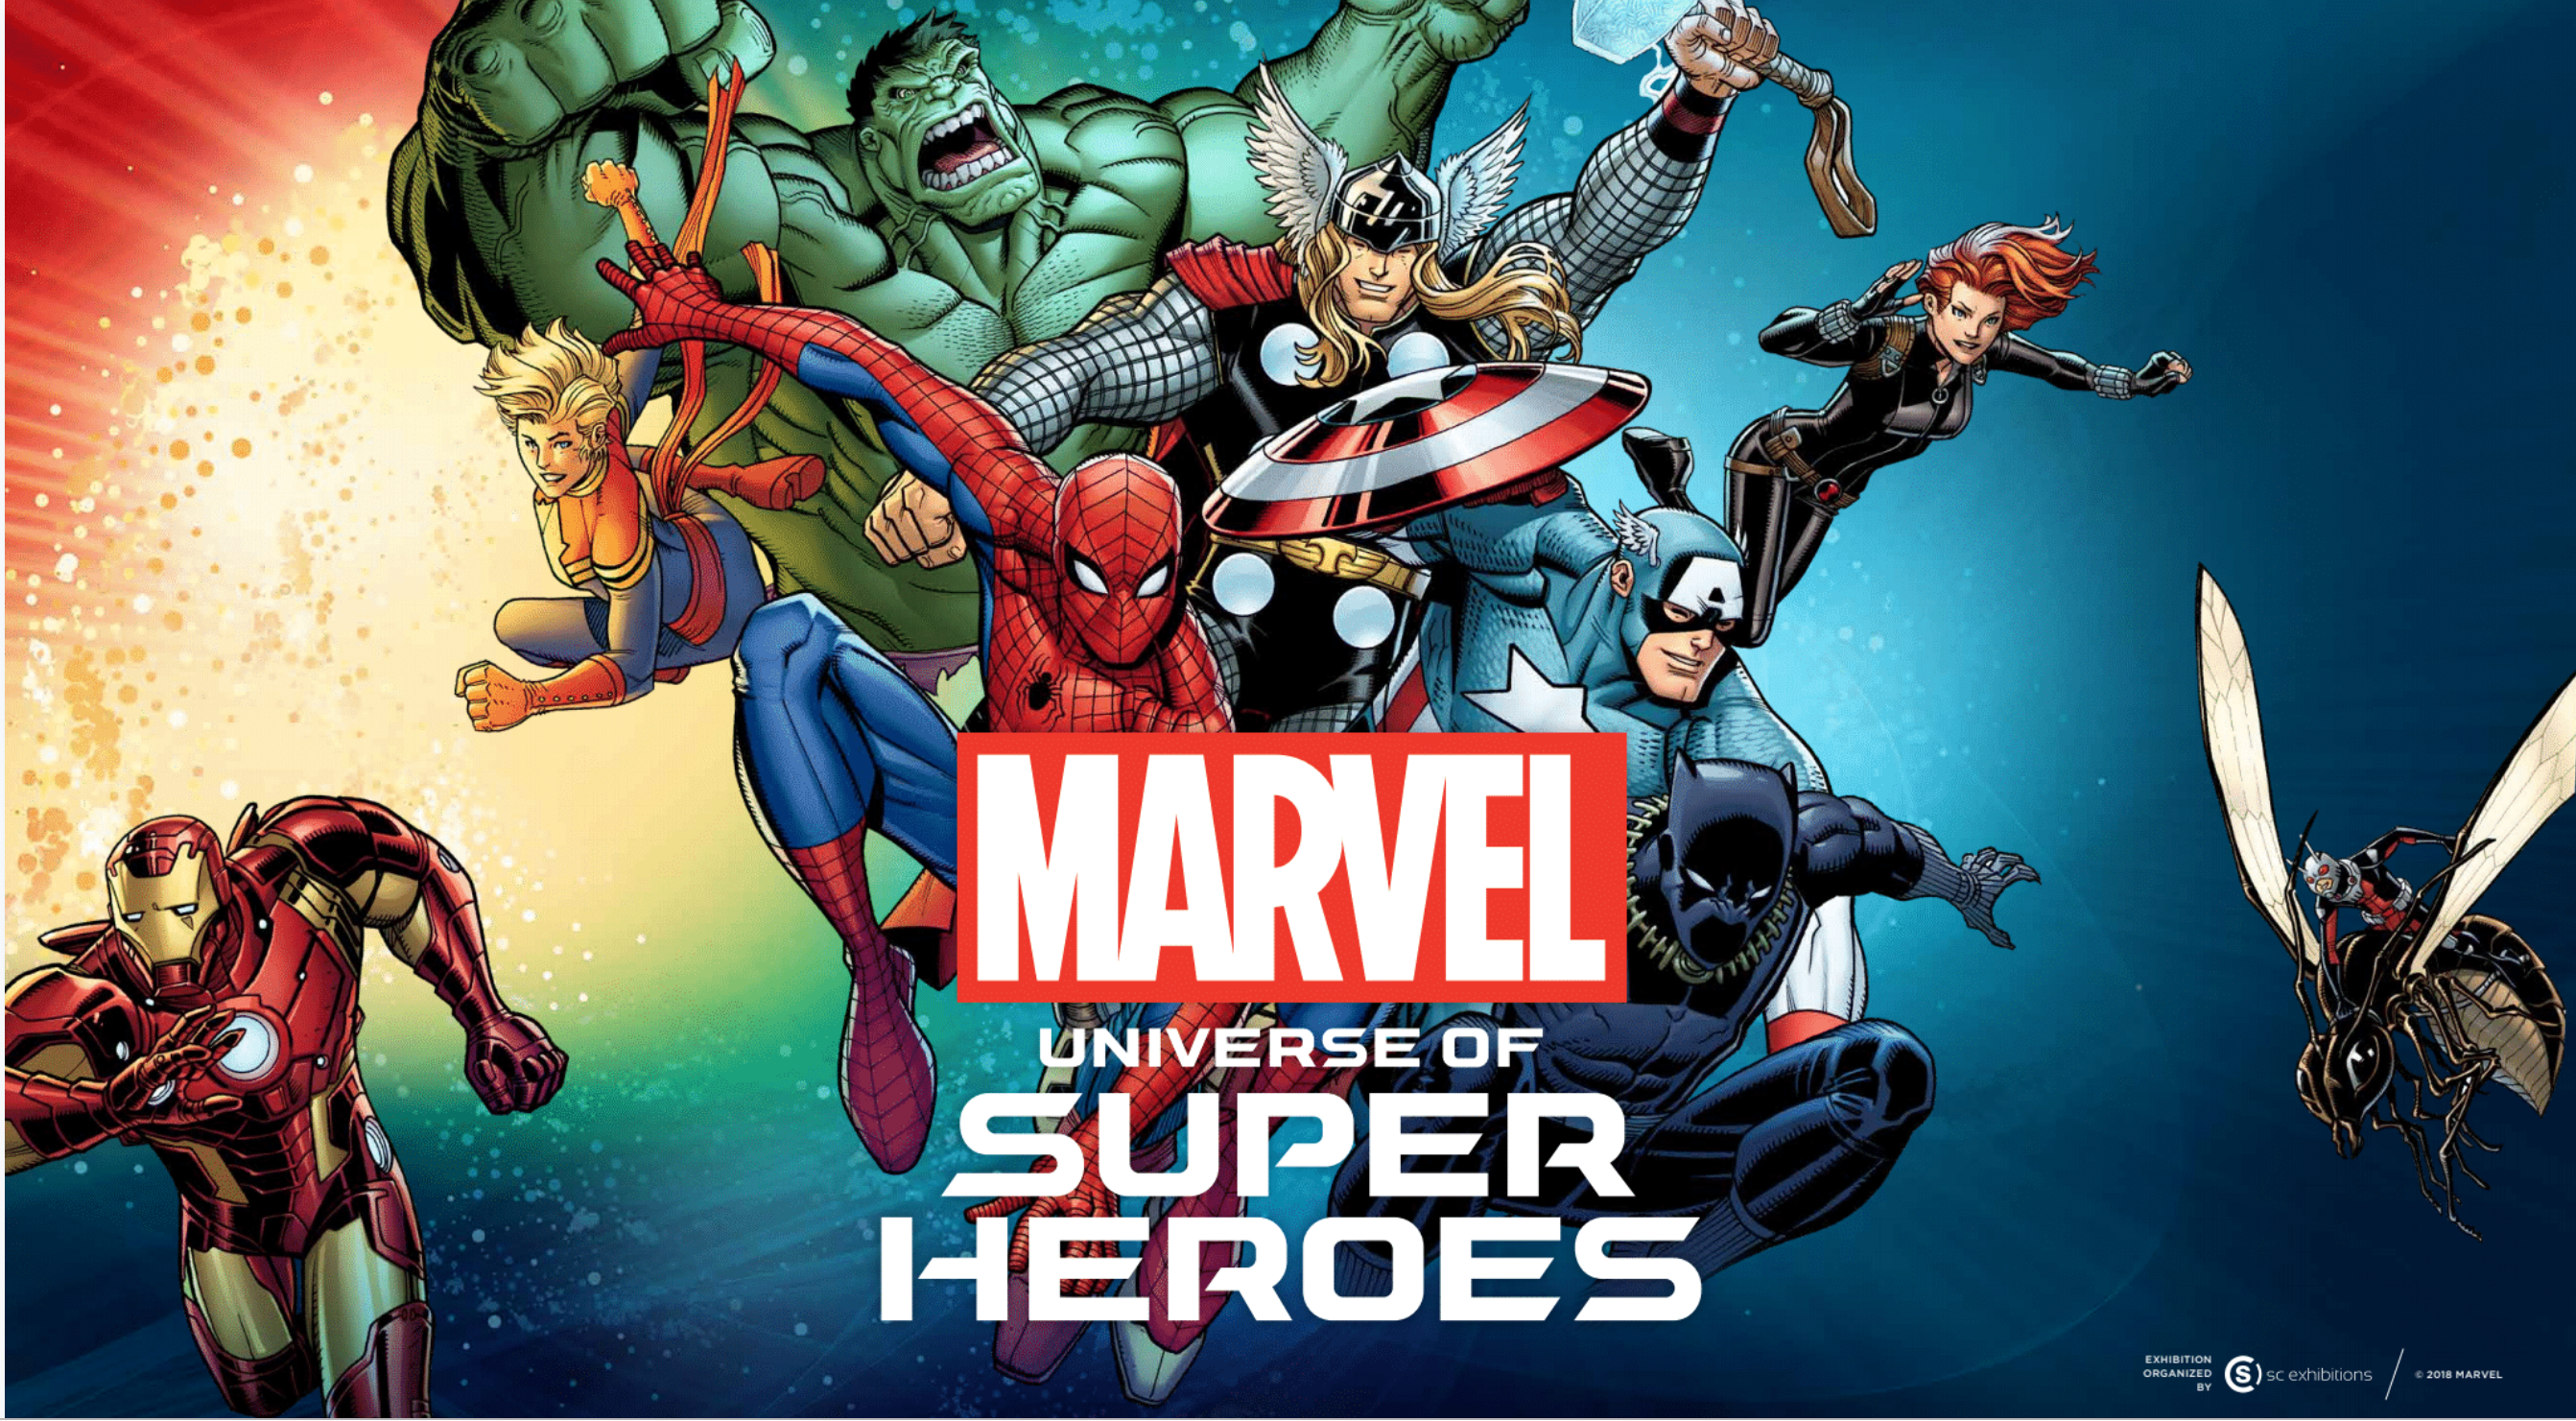 MARVEL: Universe of Super Heroes